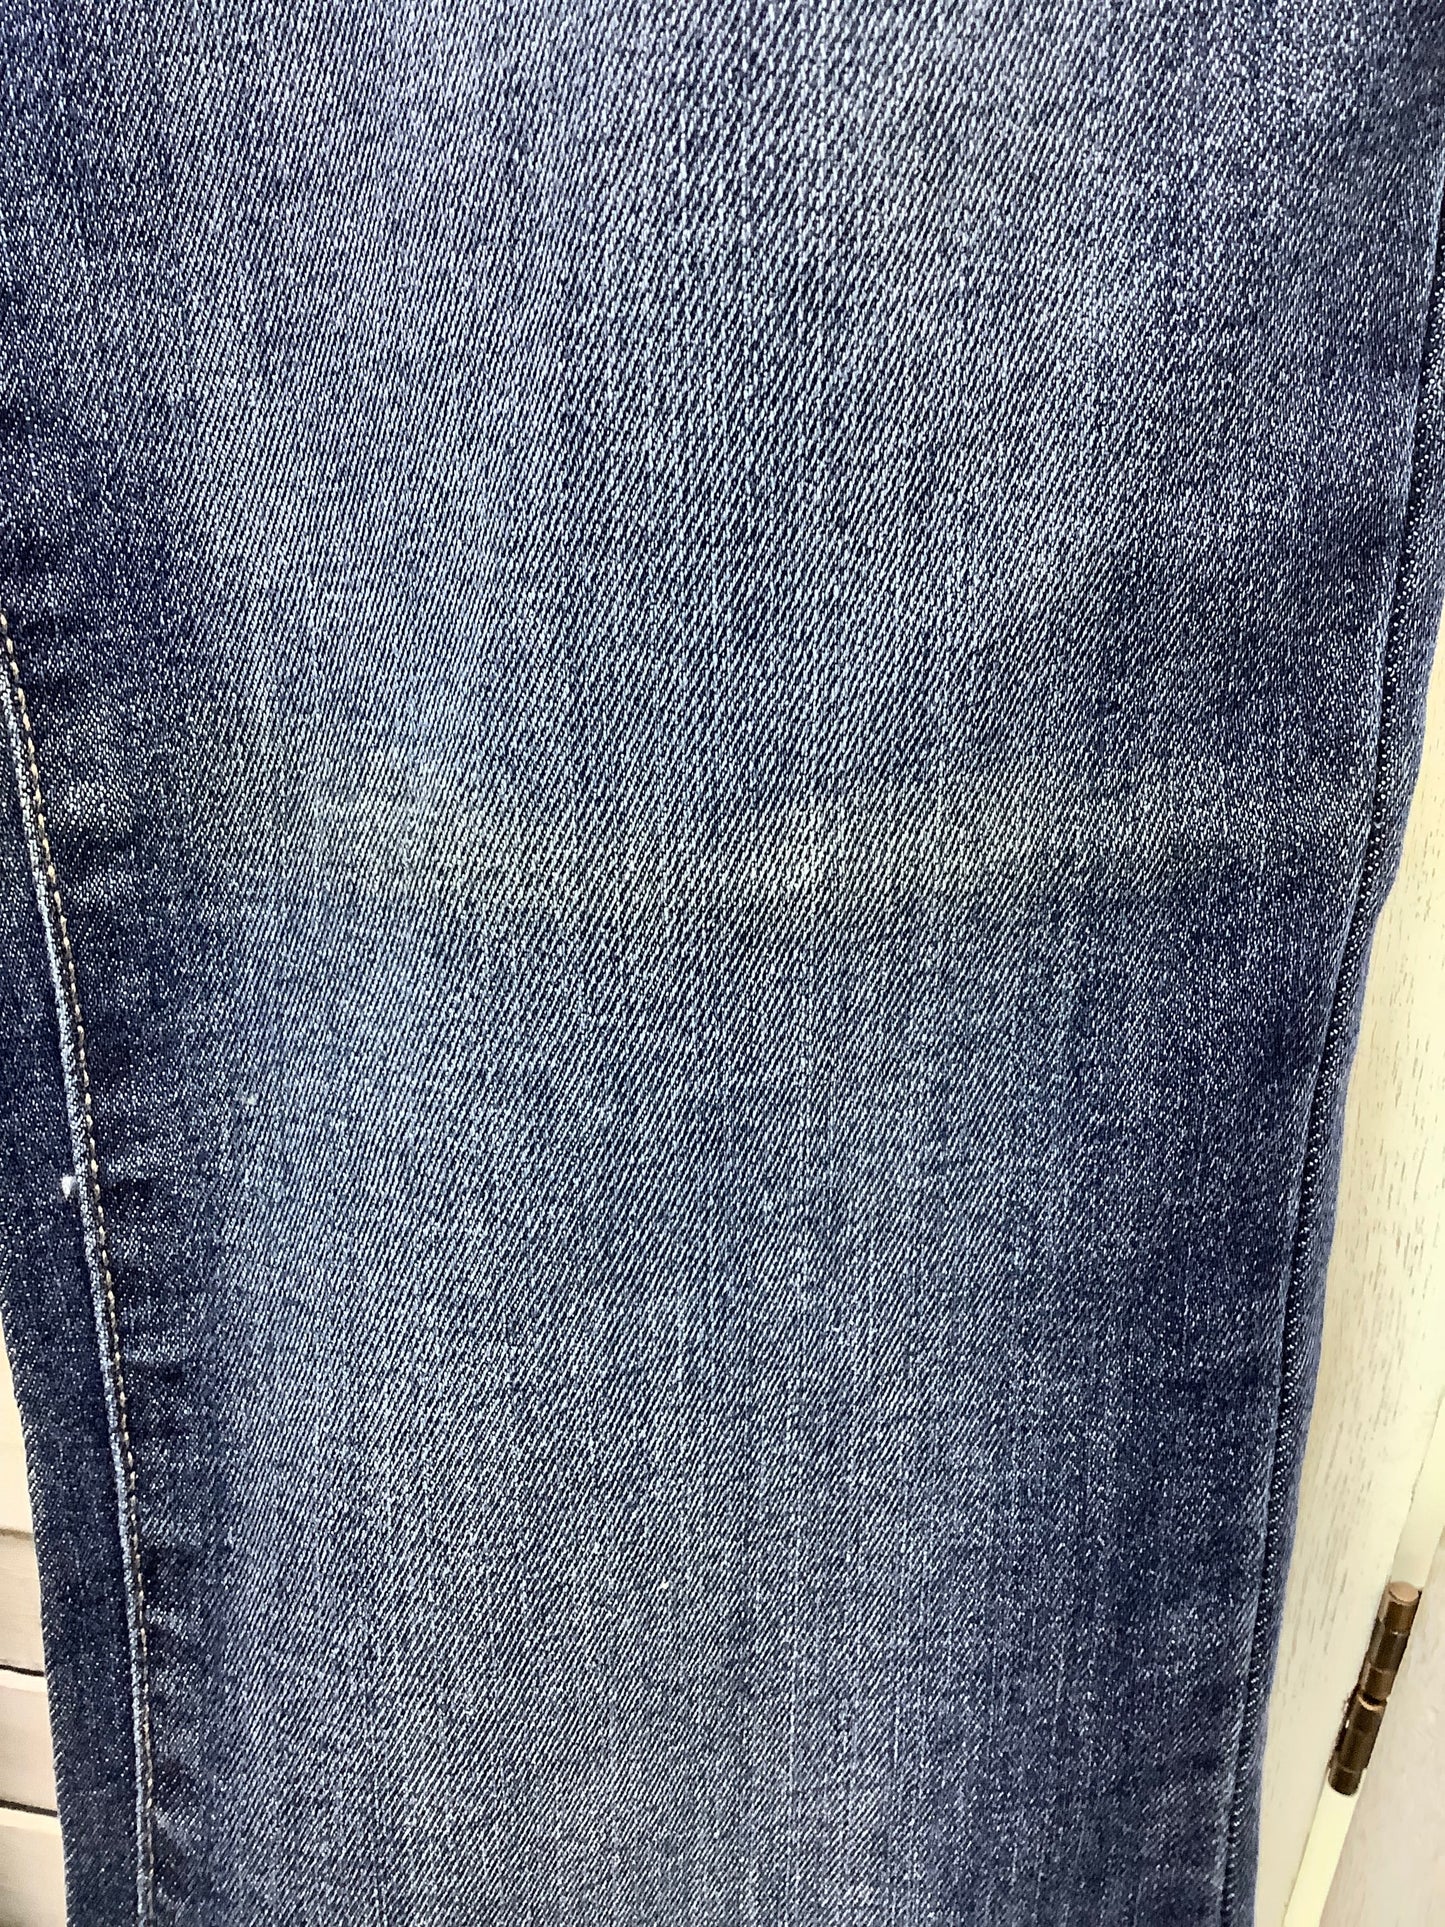 Blue Denim Jeans Boot Cut Banana Republic, Size 8